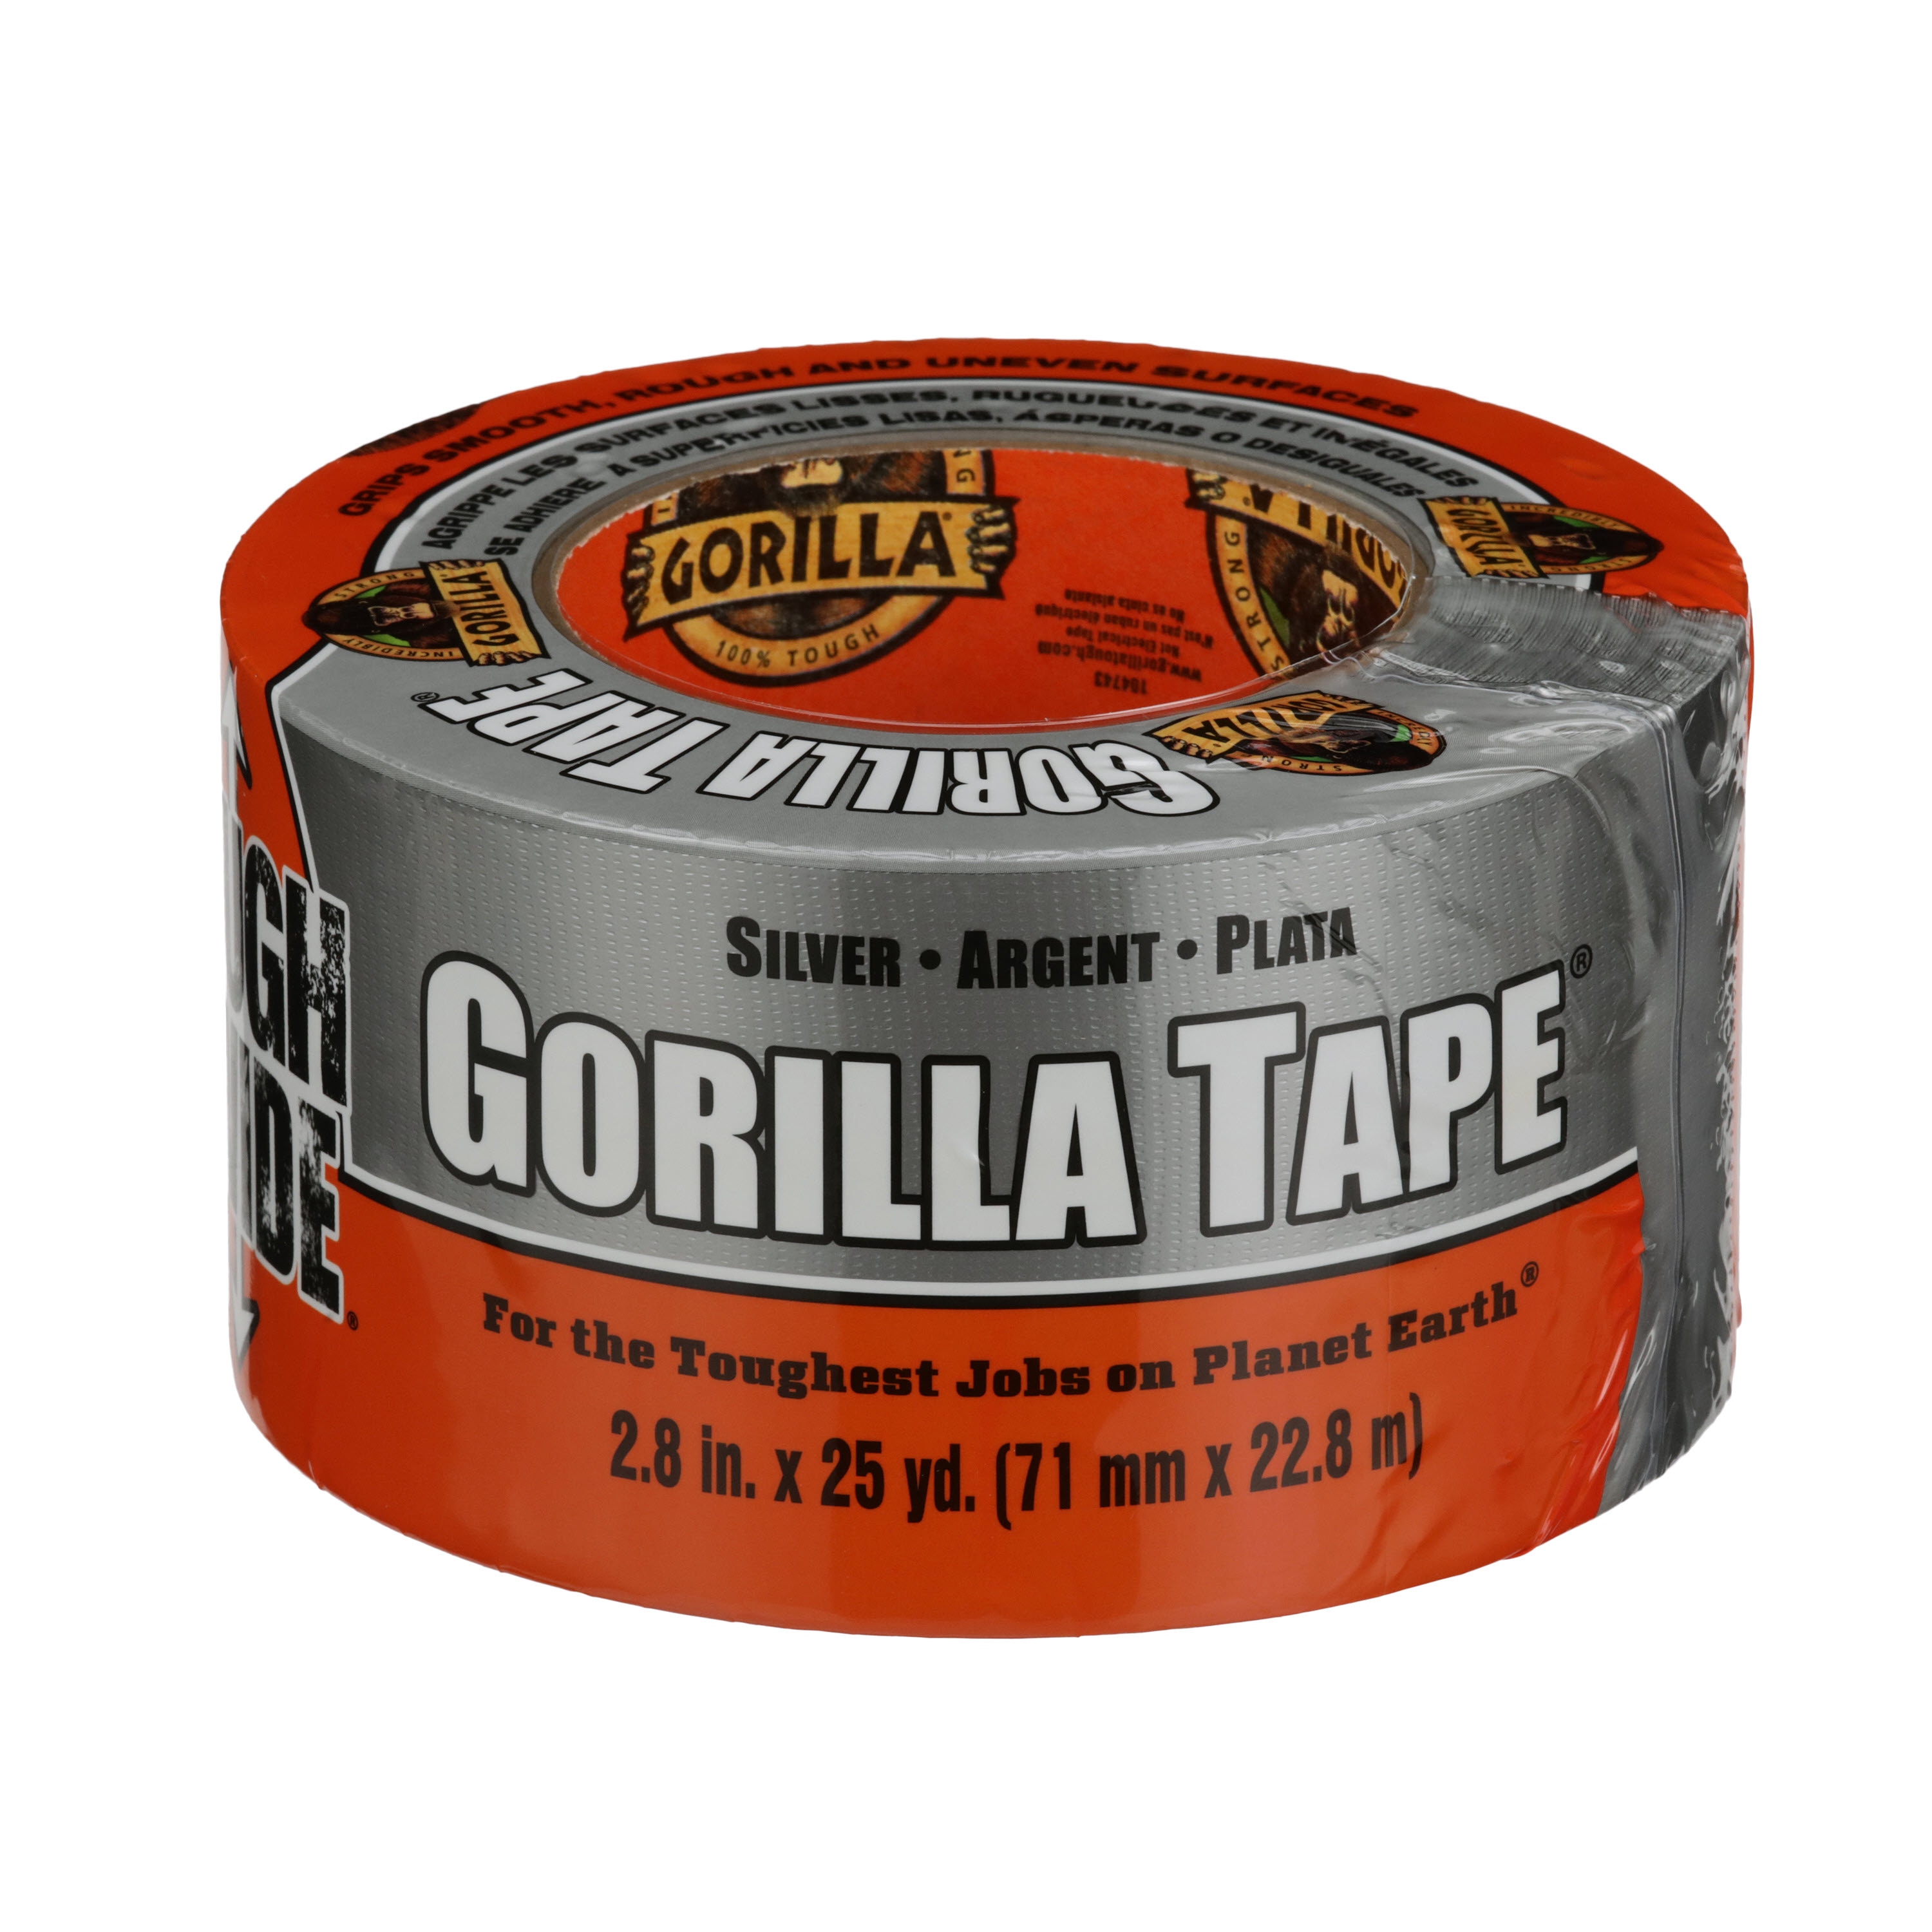 Gorilla Tough & Wide Duct Tape Silver